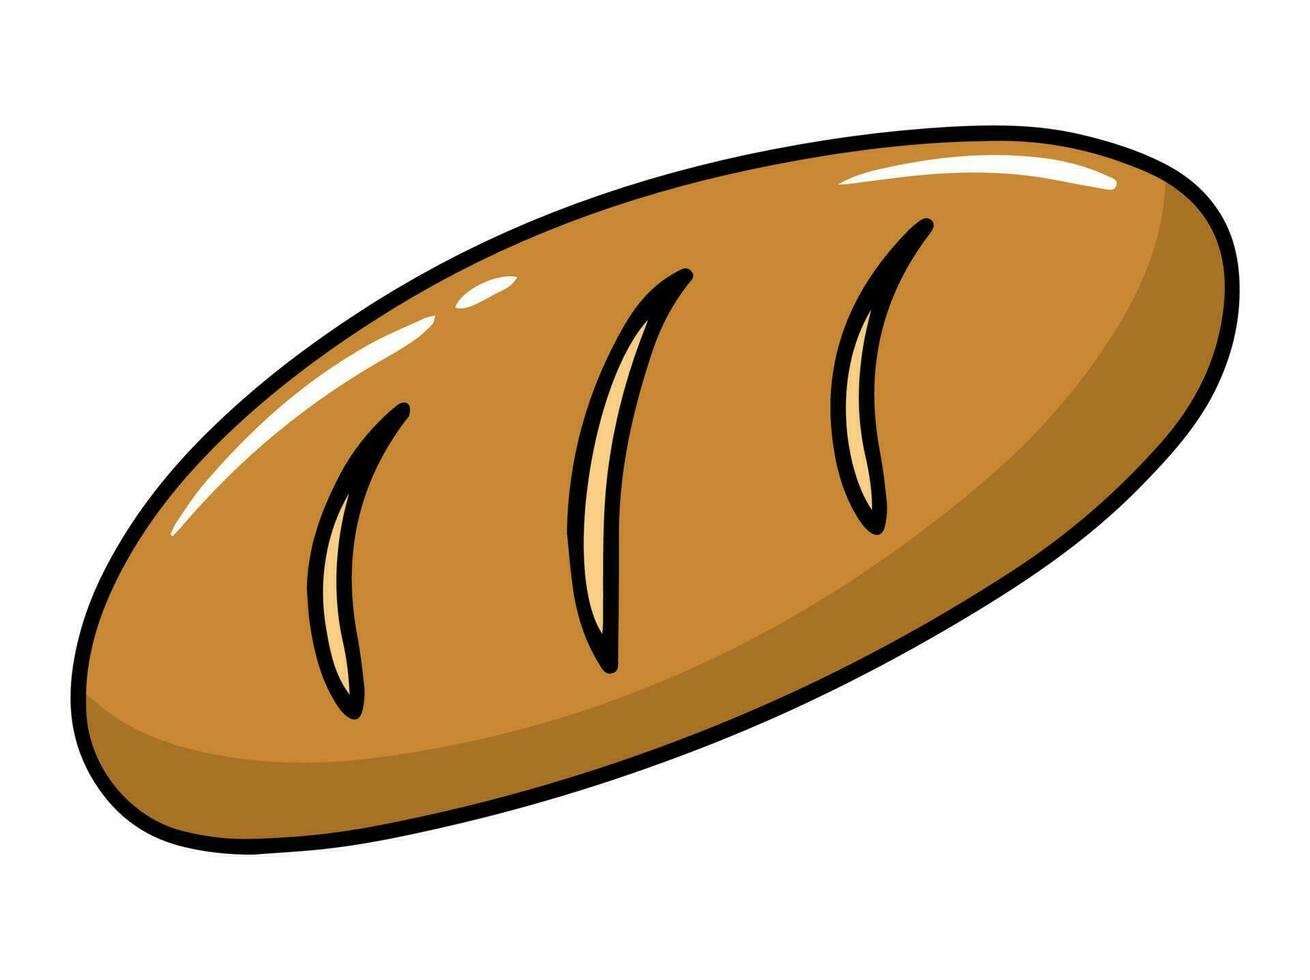 Bread Fast Food Clipart Illustration vector